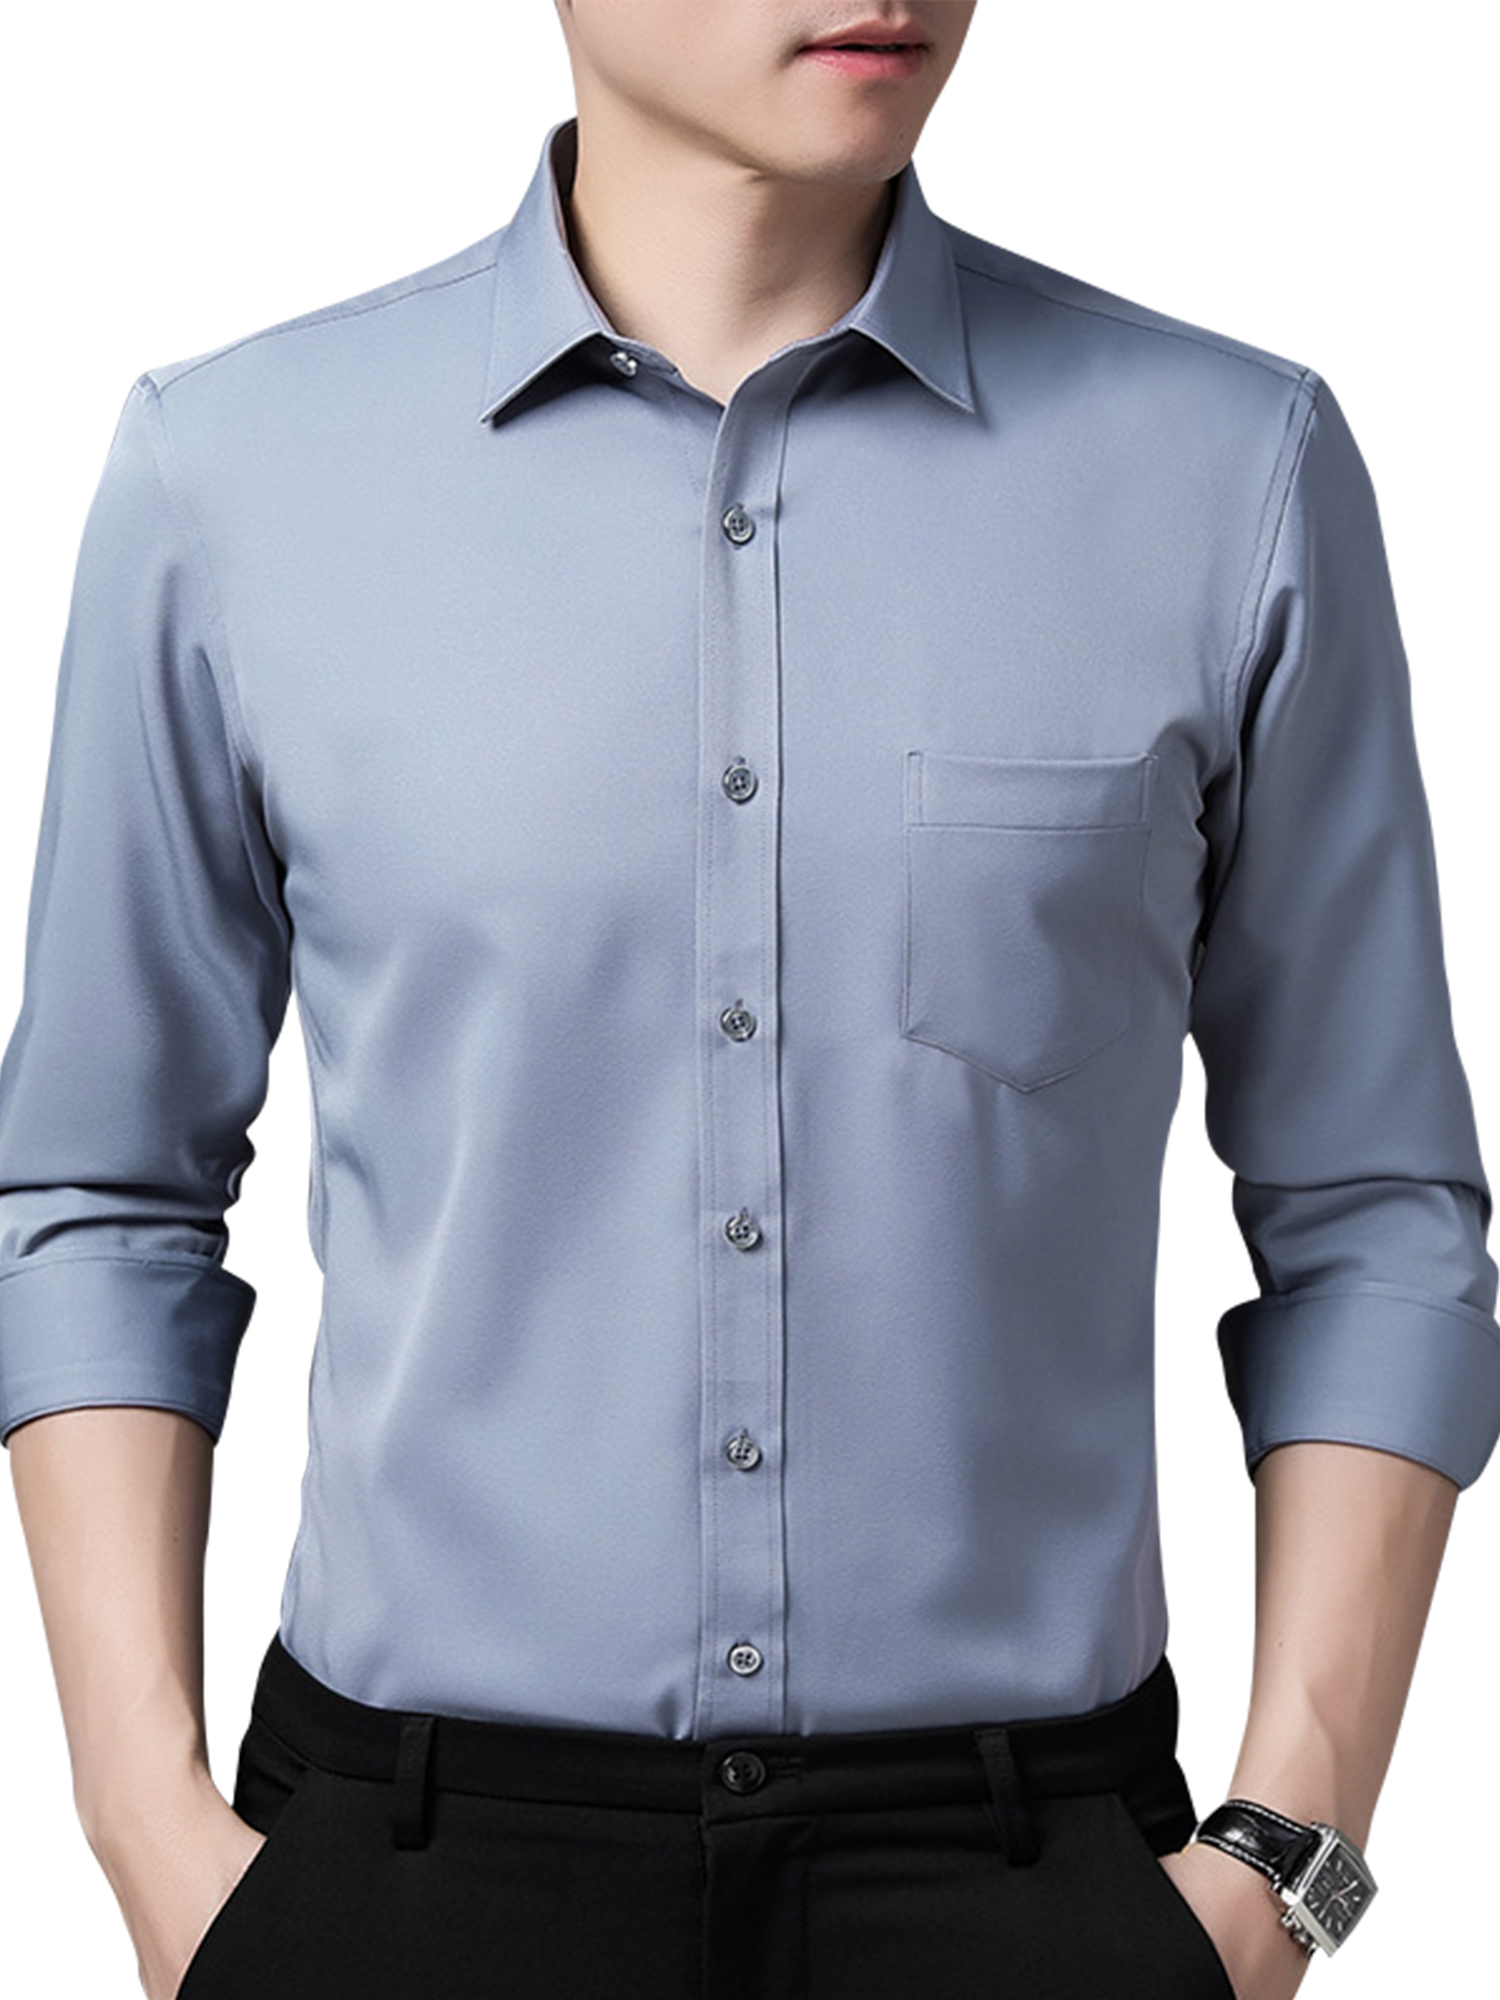 J.VER Mens Dress Shirts Long Sleeve Regular Fit Casual Button Down Shirt Elastic